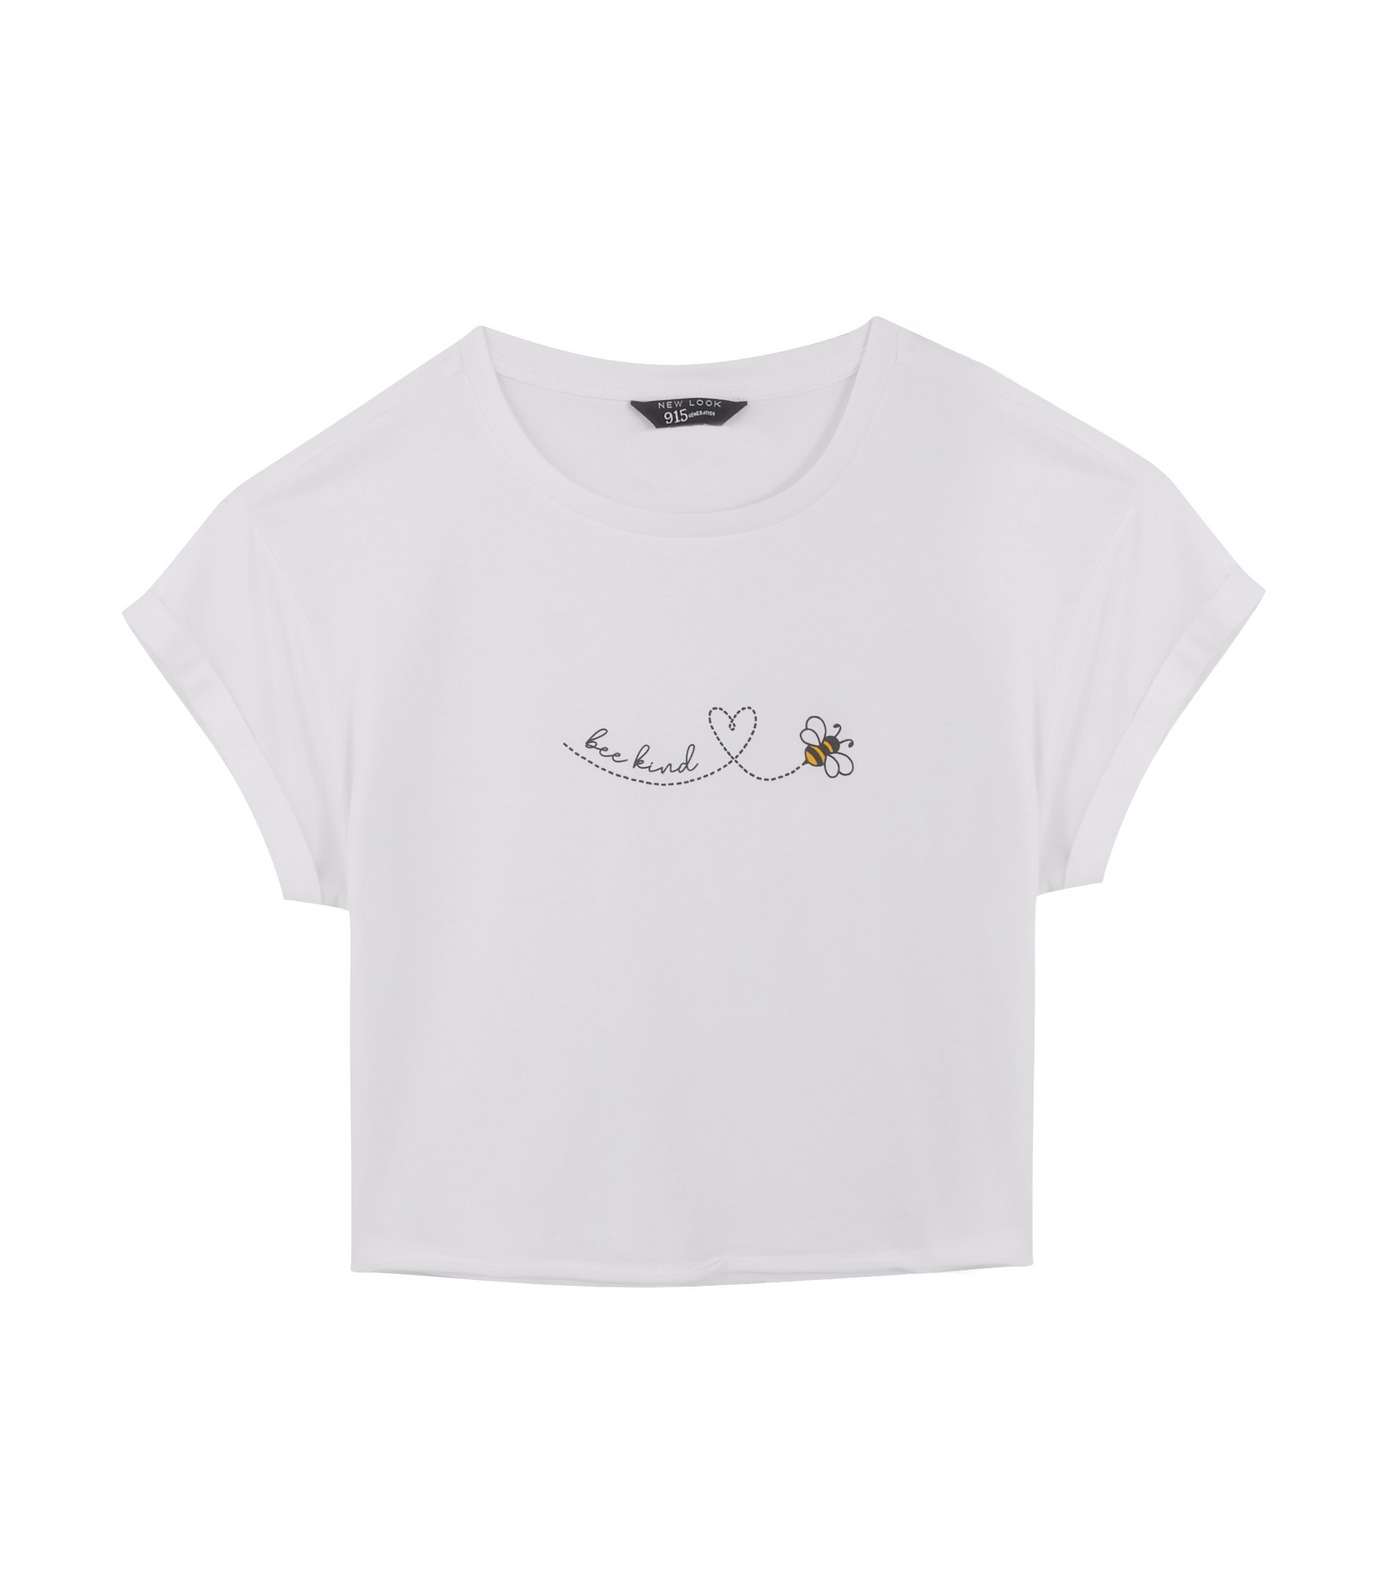 Girls White Bee Kind Slogan T-Shirt 